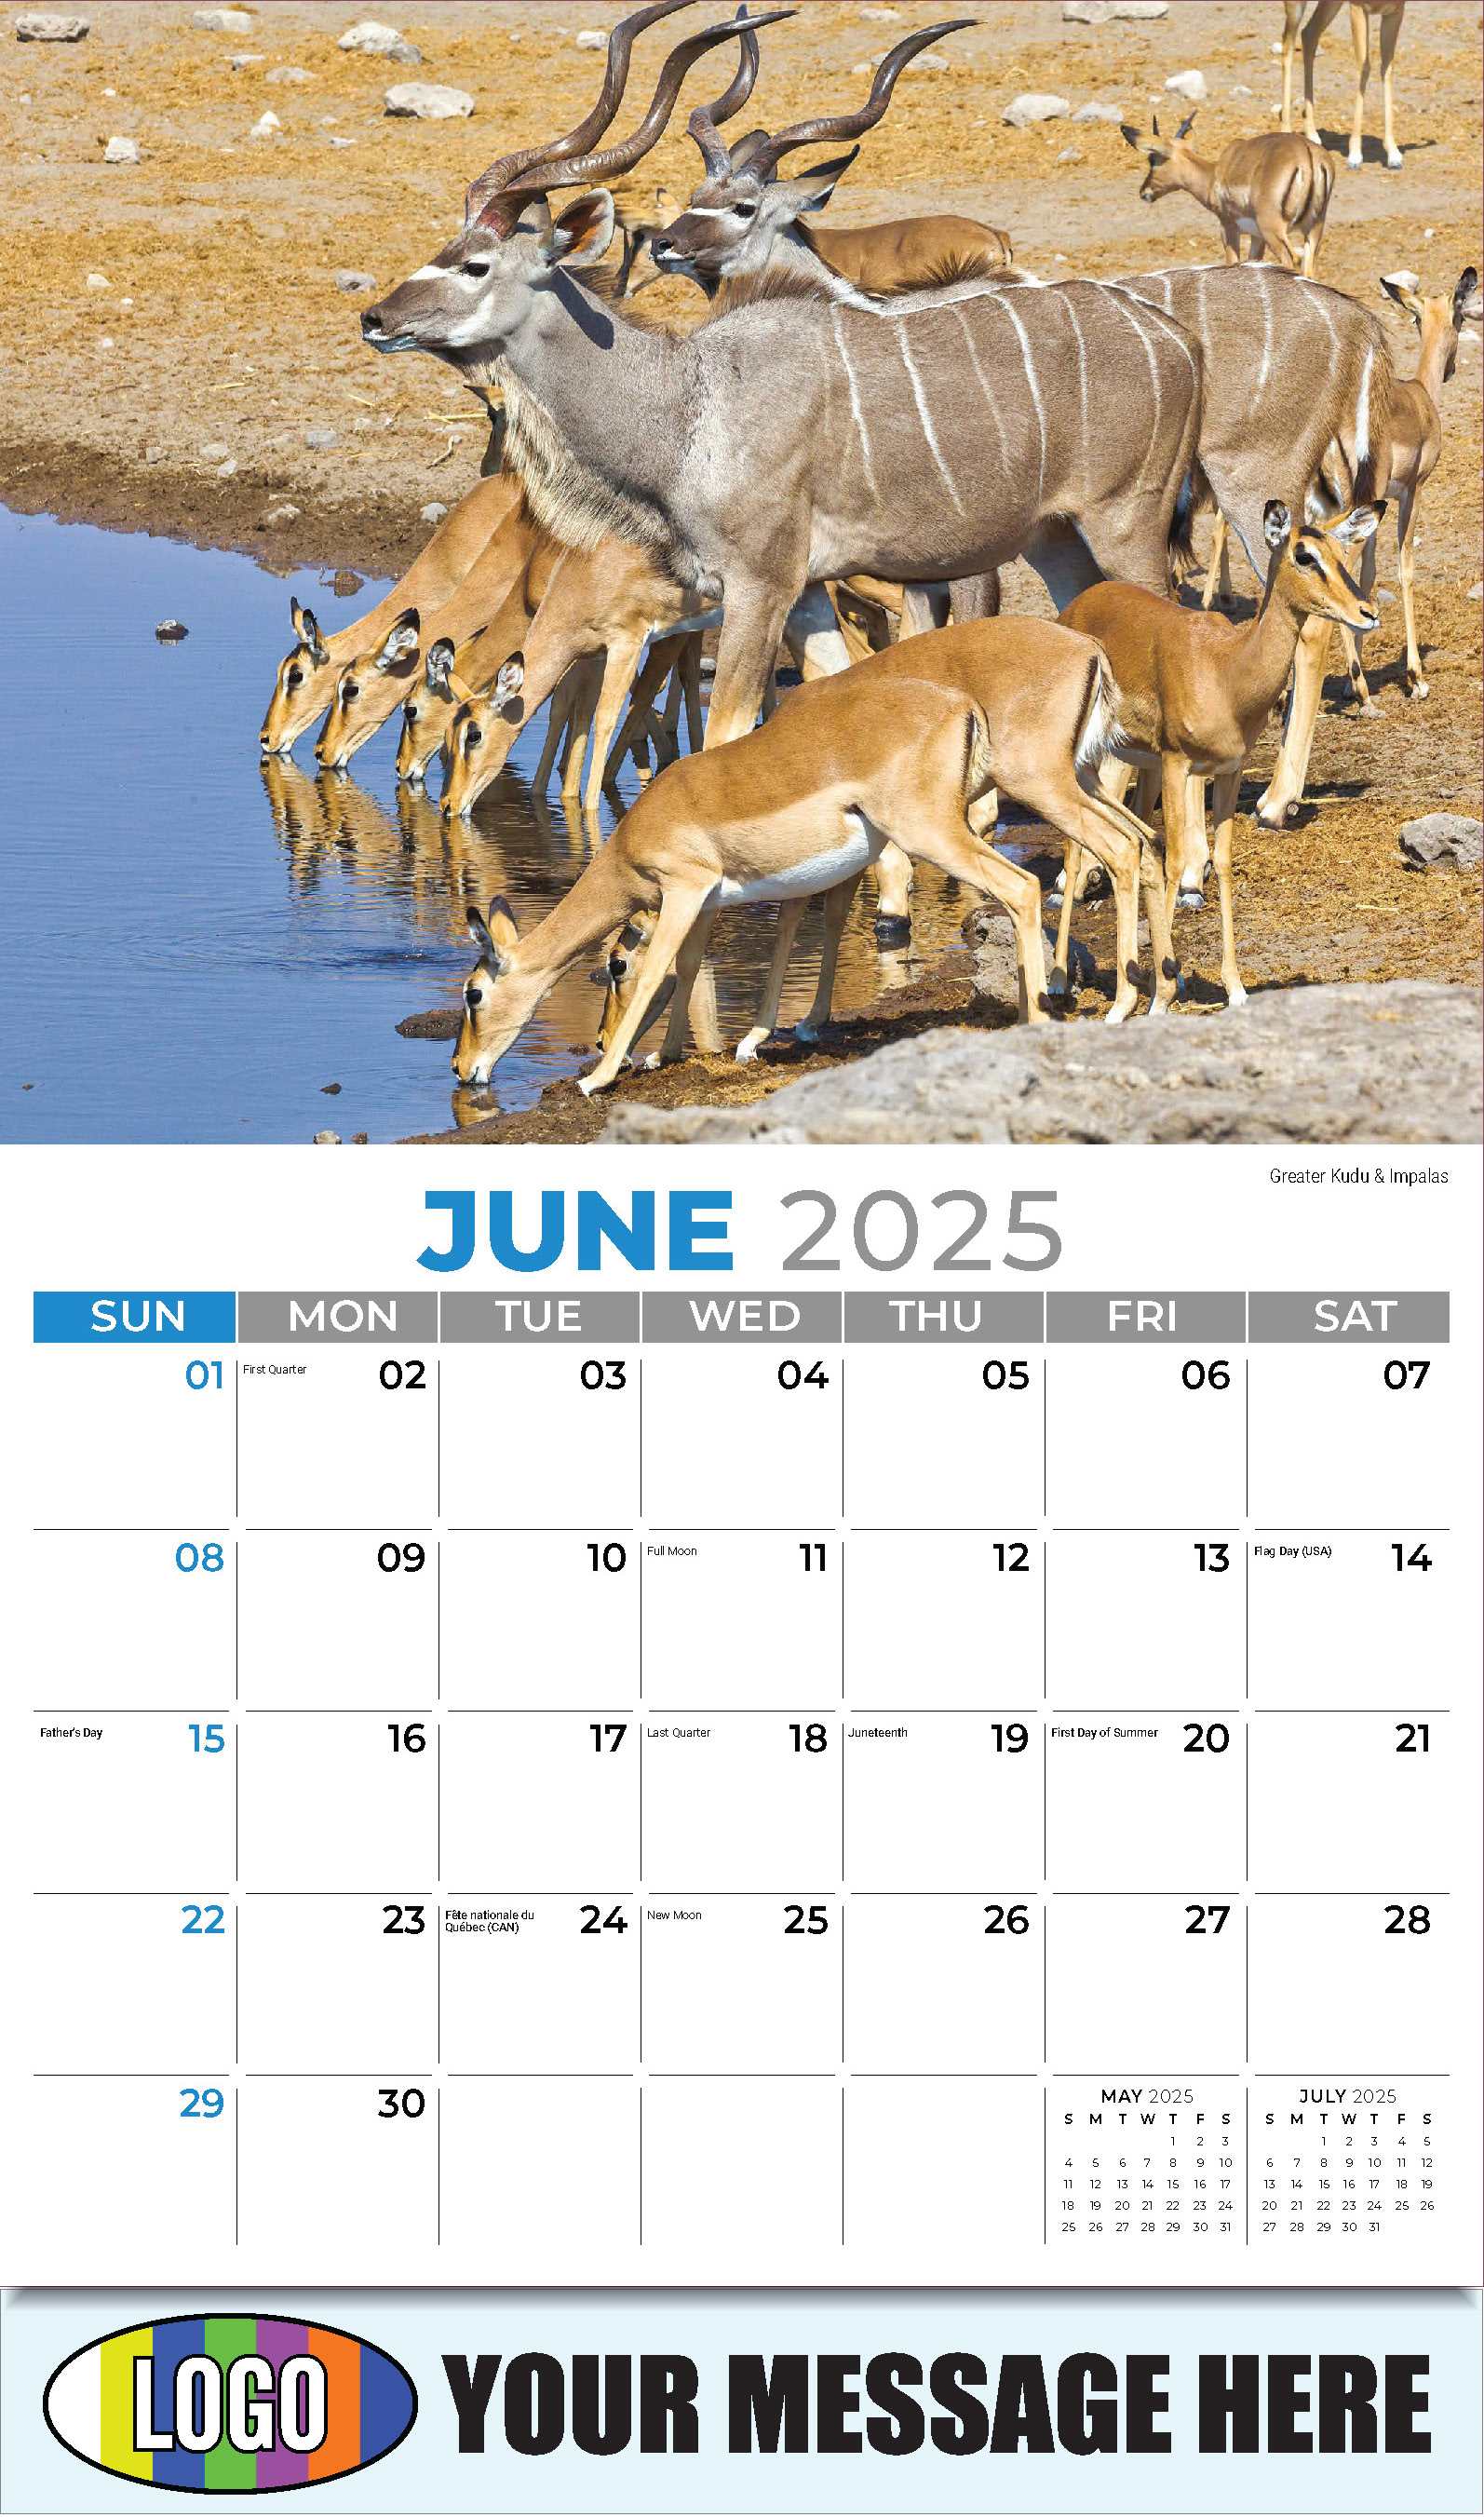 International Wildlife 2025 Business Advertising Wall Calendar - June